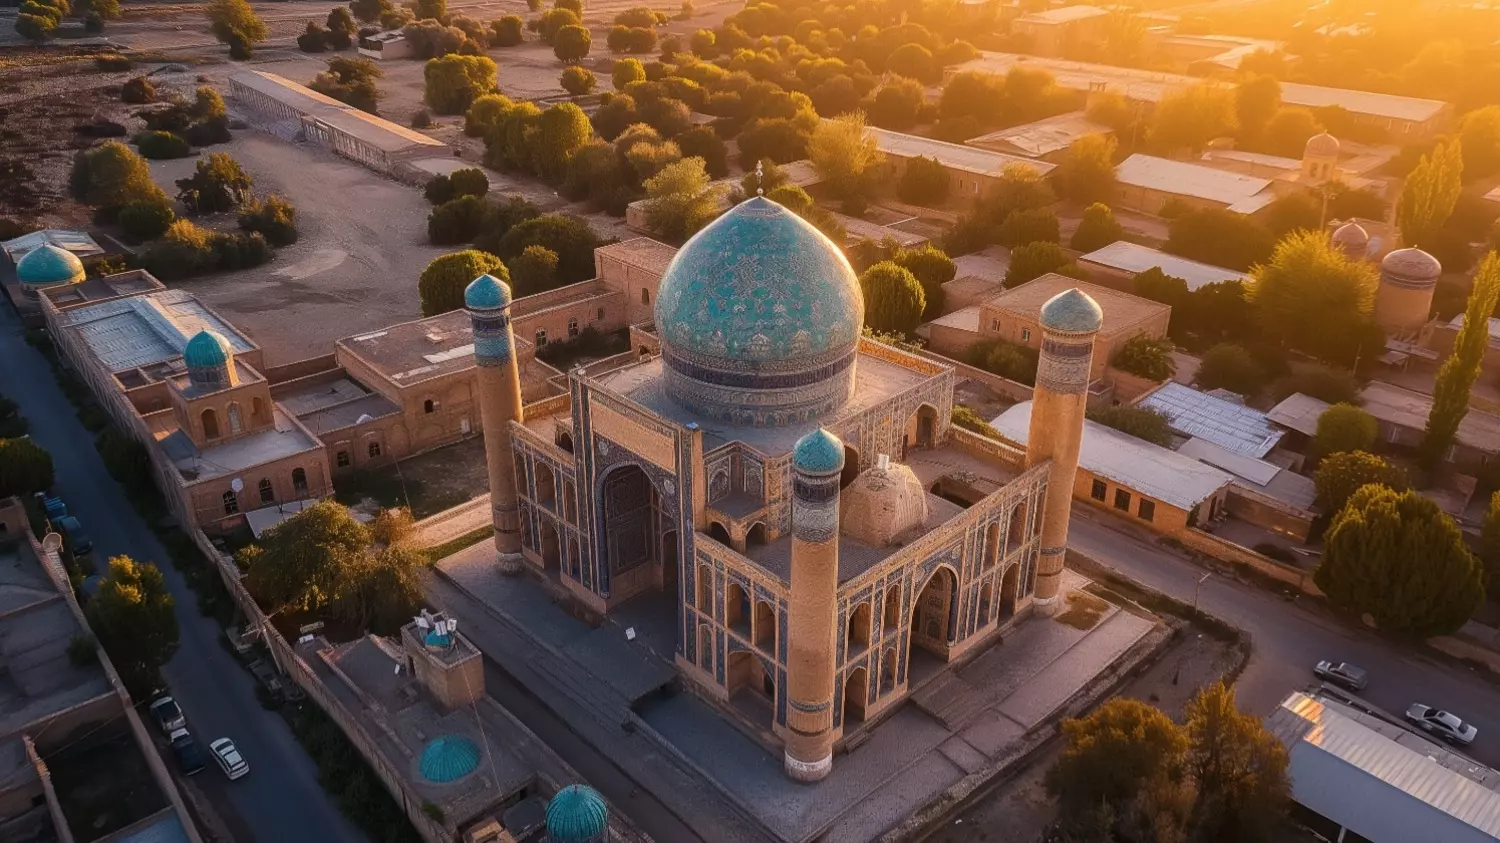 Достопримечательности Ташкента